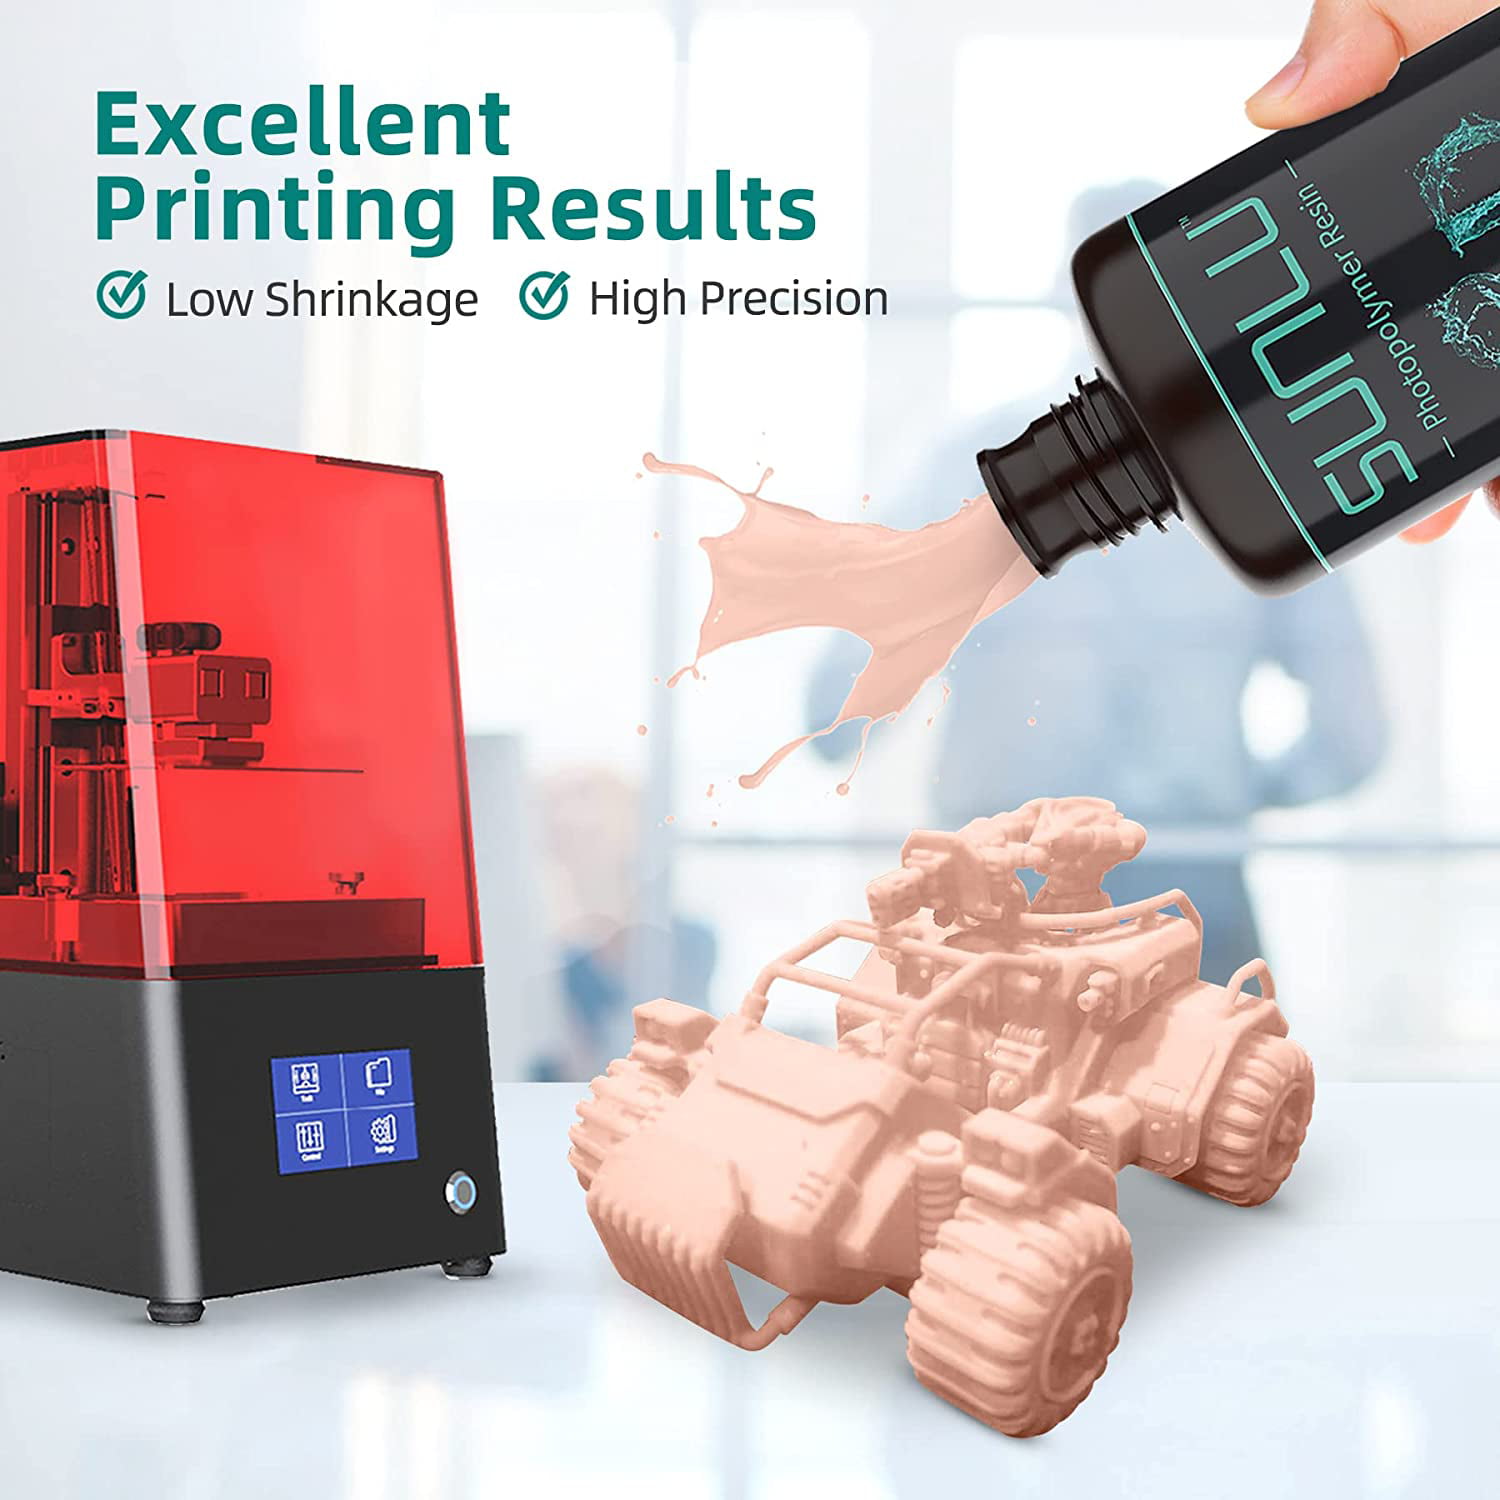 SUNLU 3D Printer Resin, Rapid Curing Standard Resin for LCD DLP SLA Resin  3D Printer, Low Shrinkage, High Precision, 2000g 3D Resin, 500g pe並行輸入品 